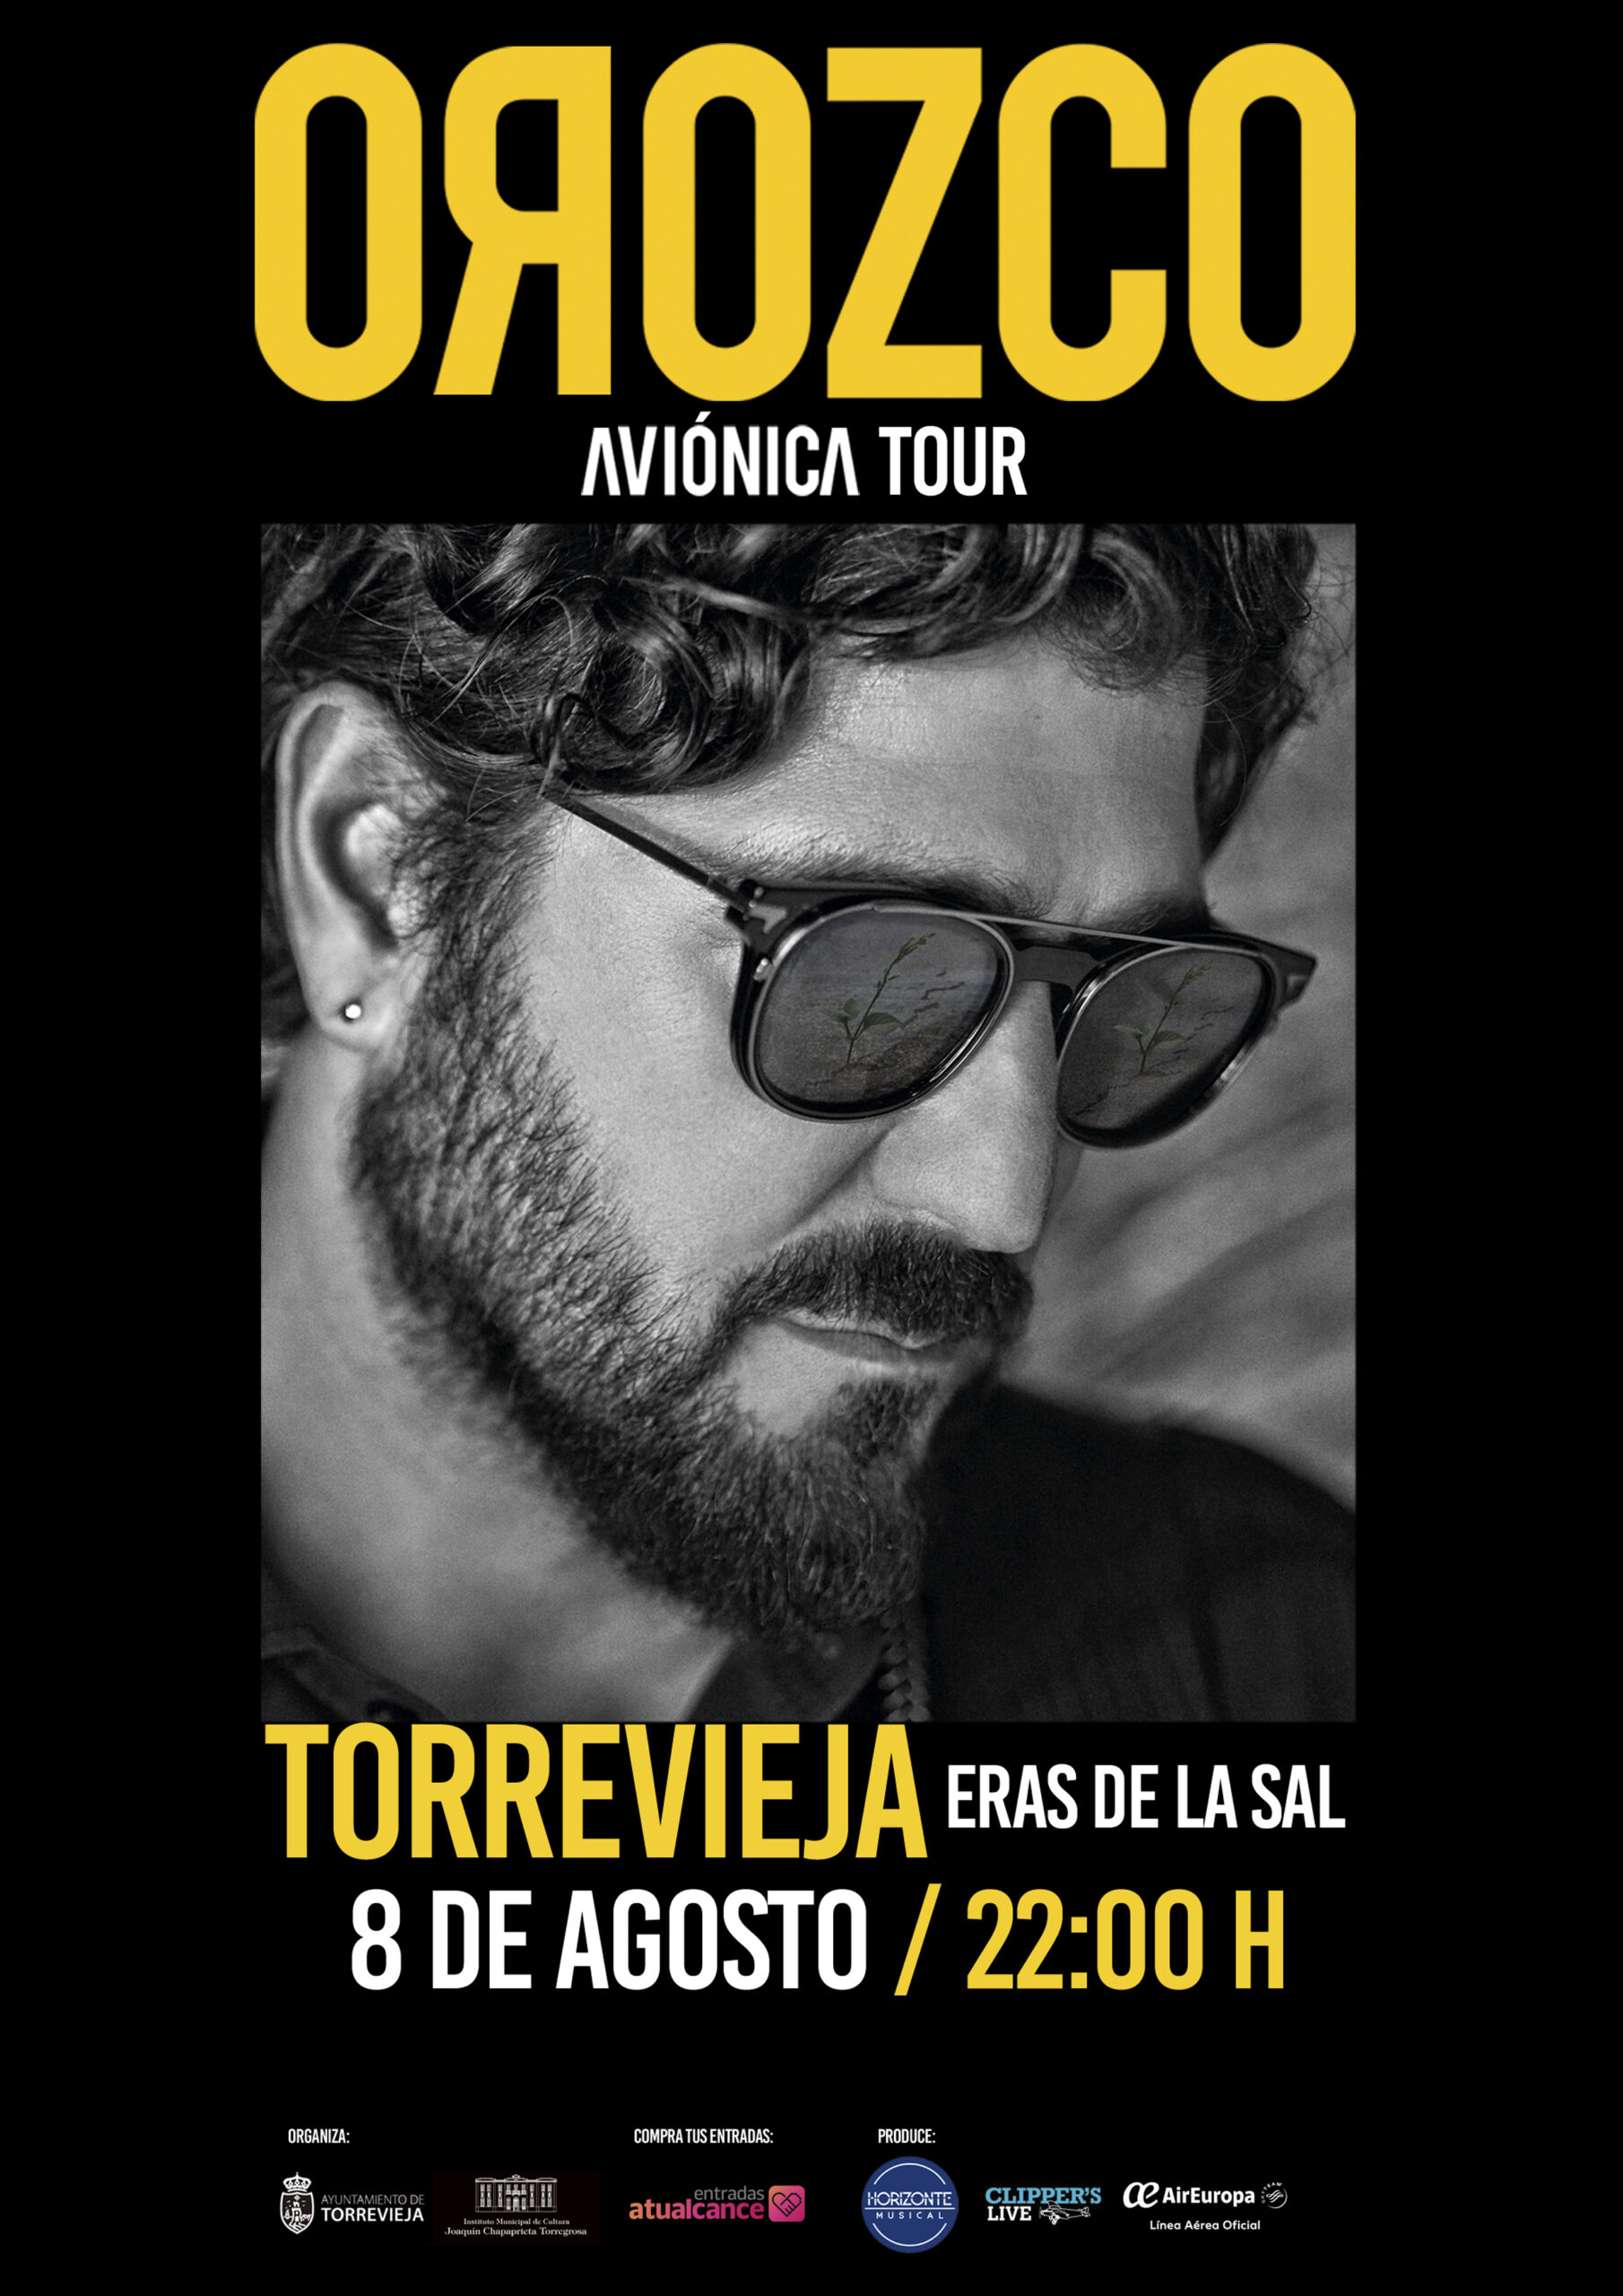 ANTONIO OROZCO, "AVIONICA TOUR" - Torrevieja